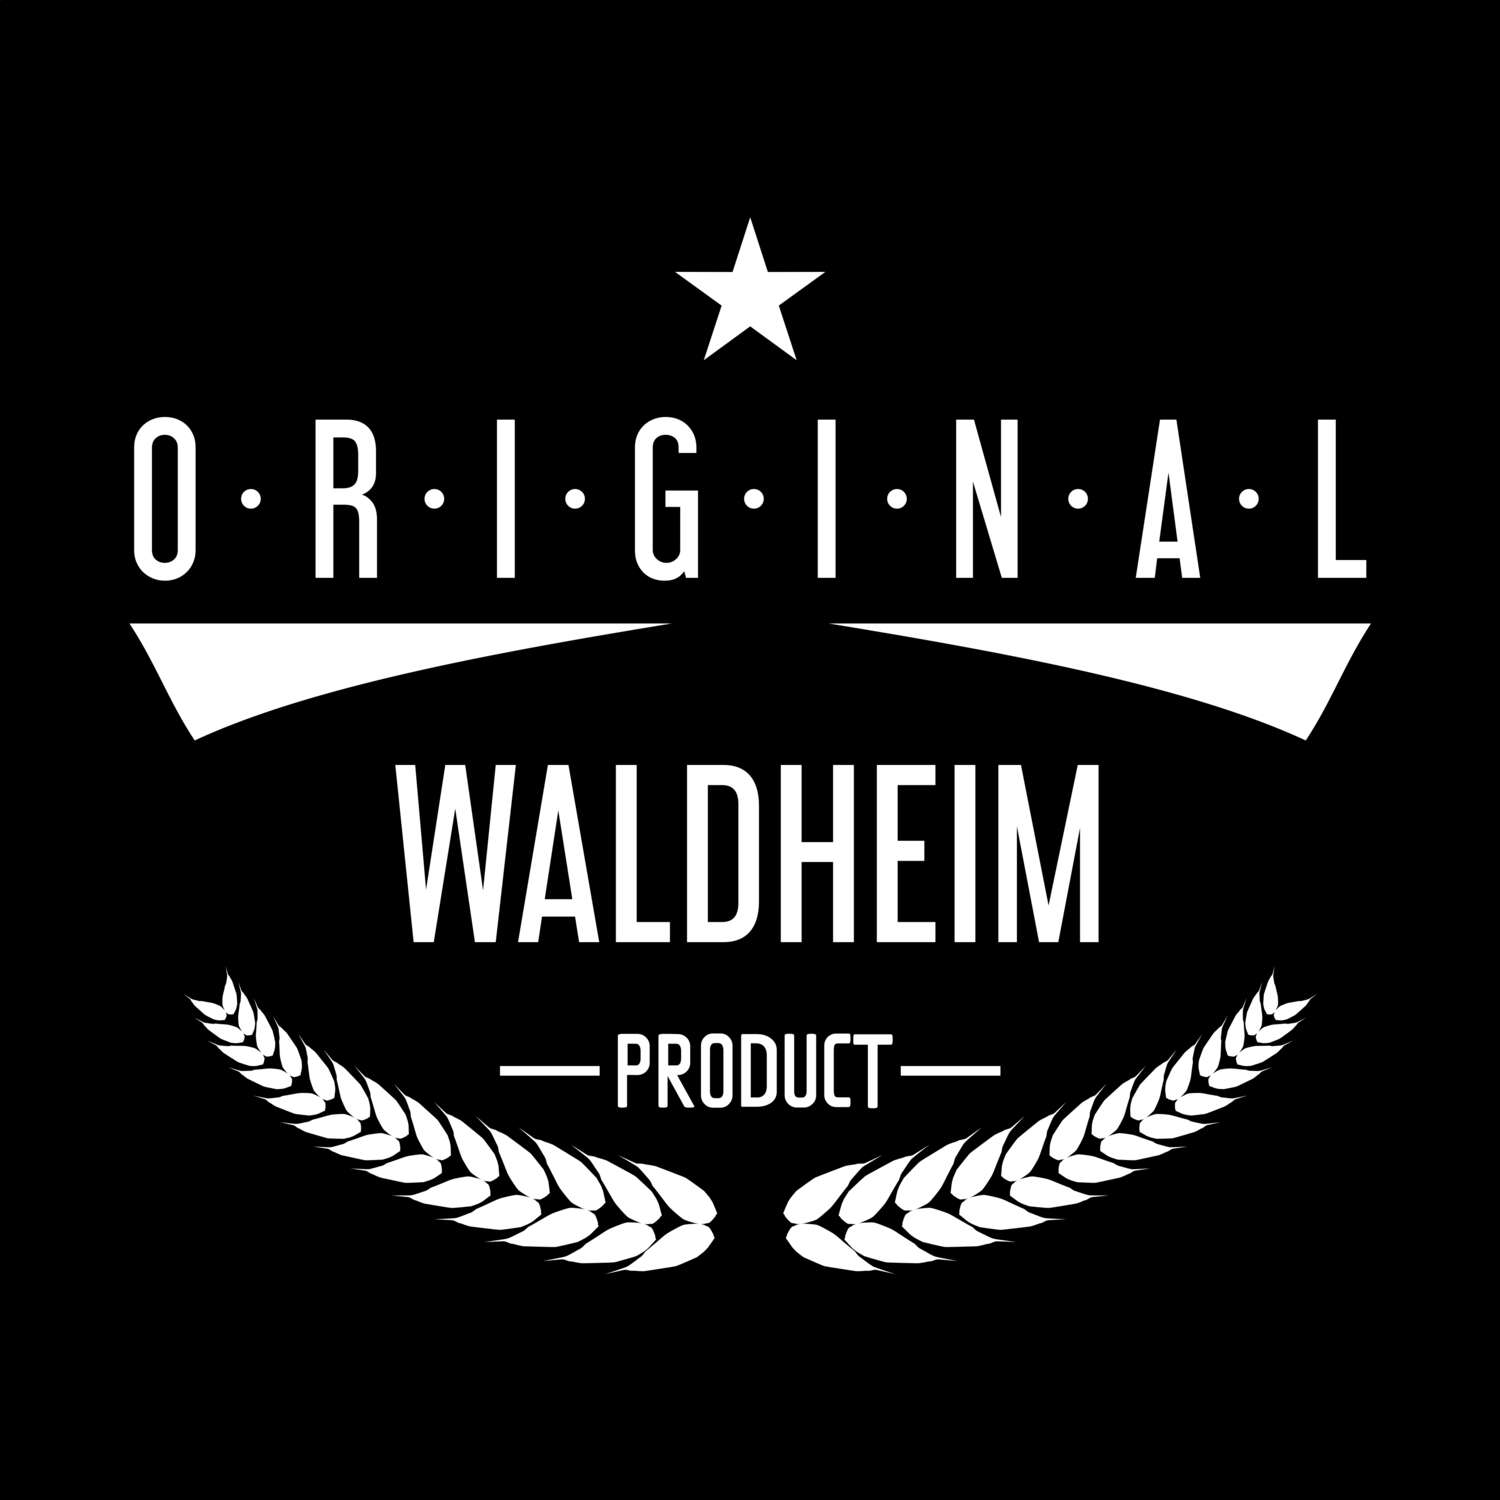 Waldheim T-Shirt »Original Product«